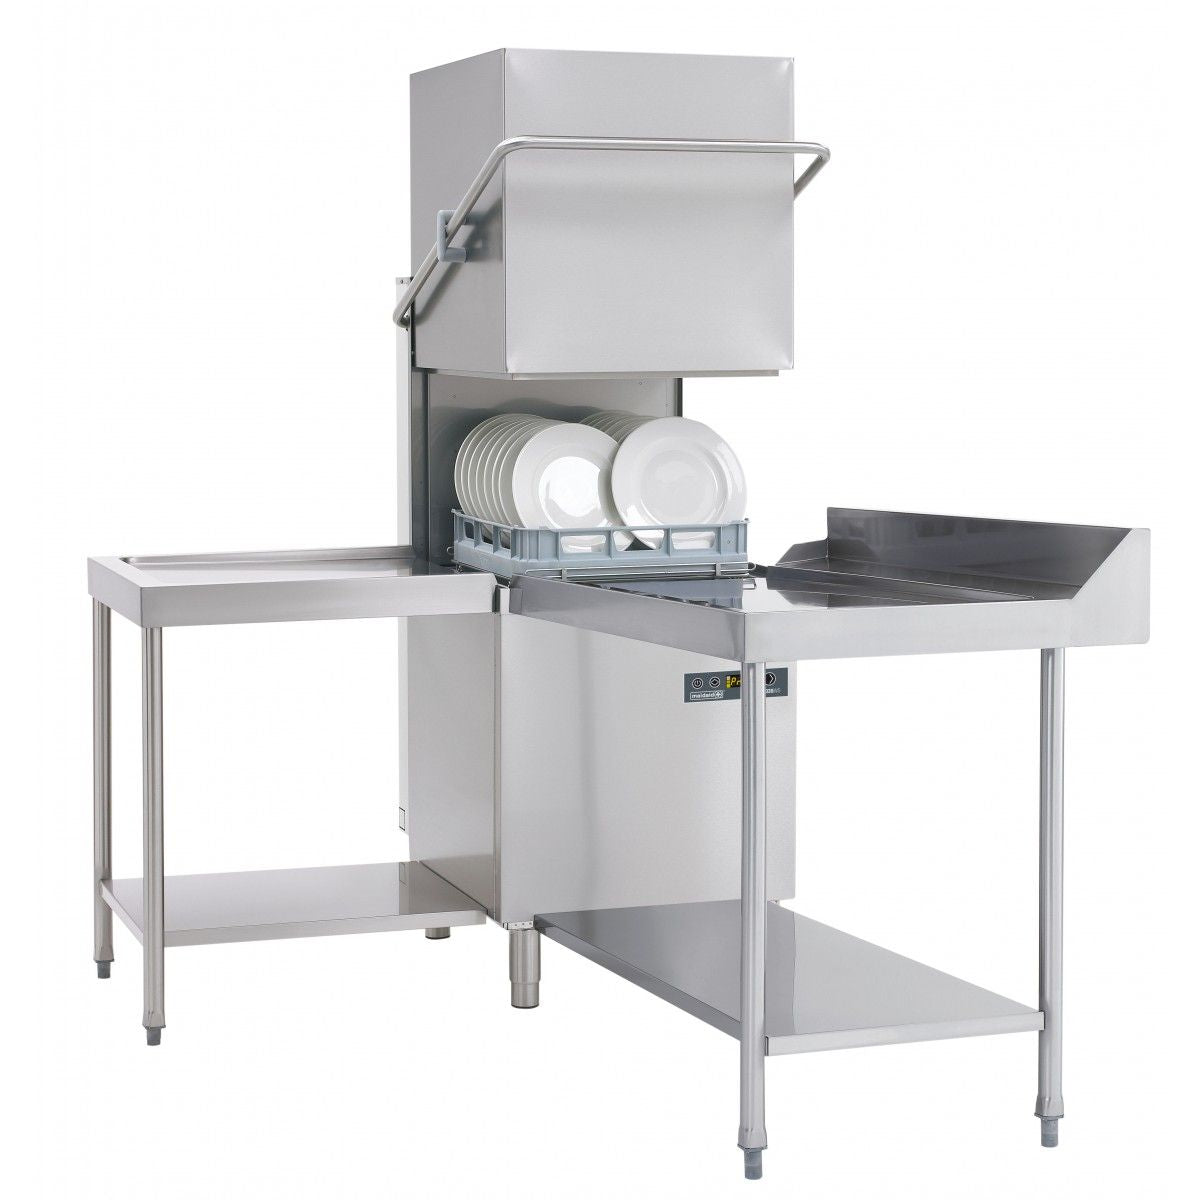 Maidaid C2035WS Pass Through Dishwasher 500 basket JD Catering Equipment Solutions Ltd